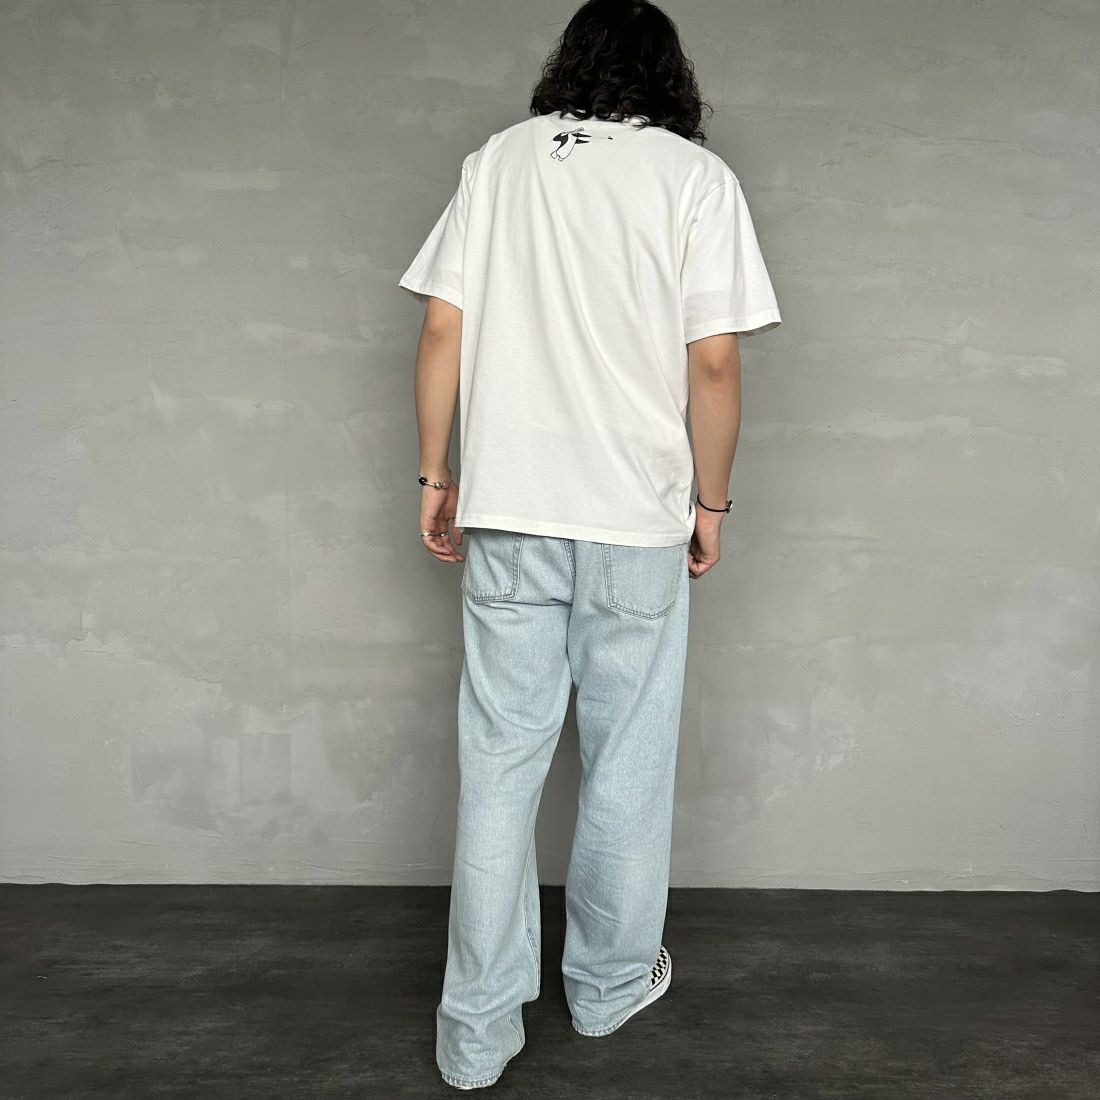 CHUMS [チャムス] プリントTシャツ [CH01-2379] W001 WHITE &&モデル身長：173cm 着用サイズ：XL&&